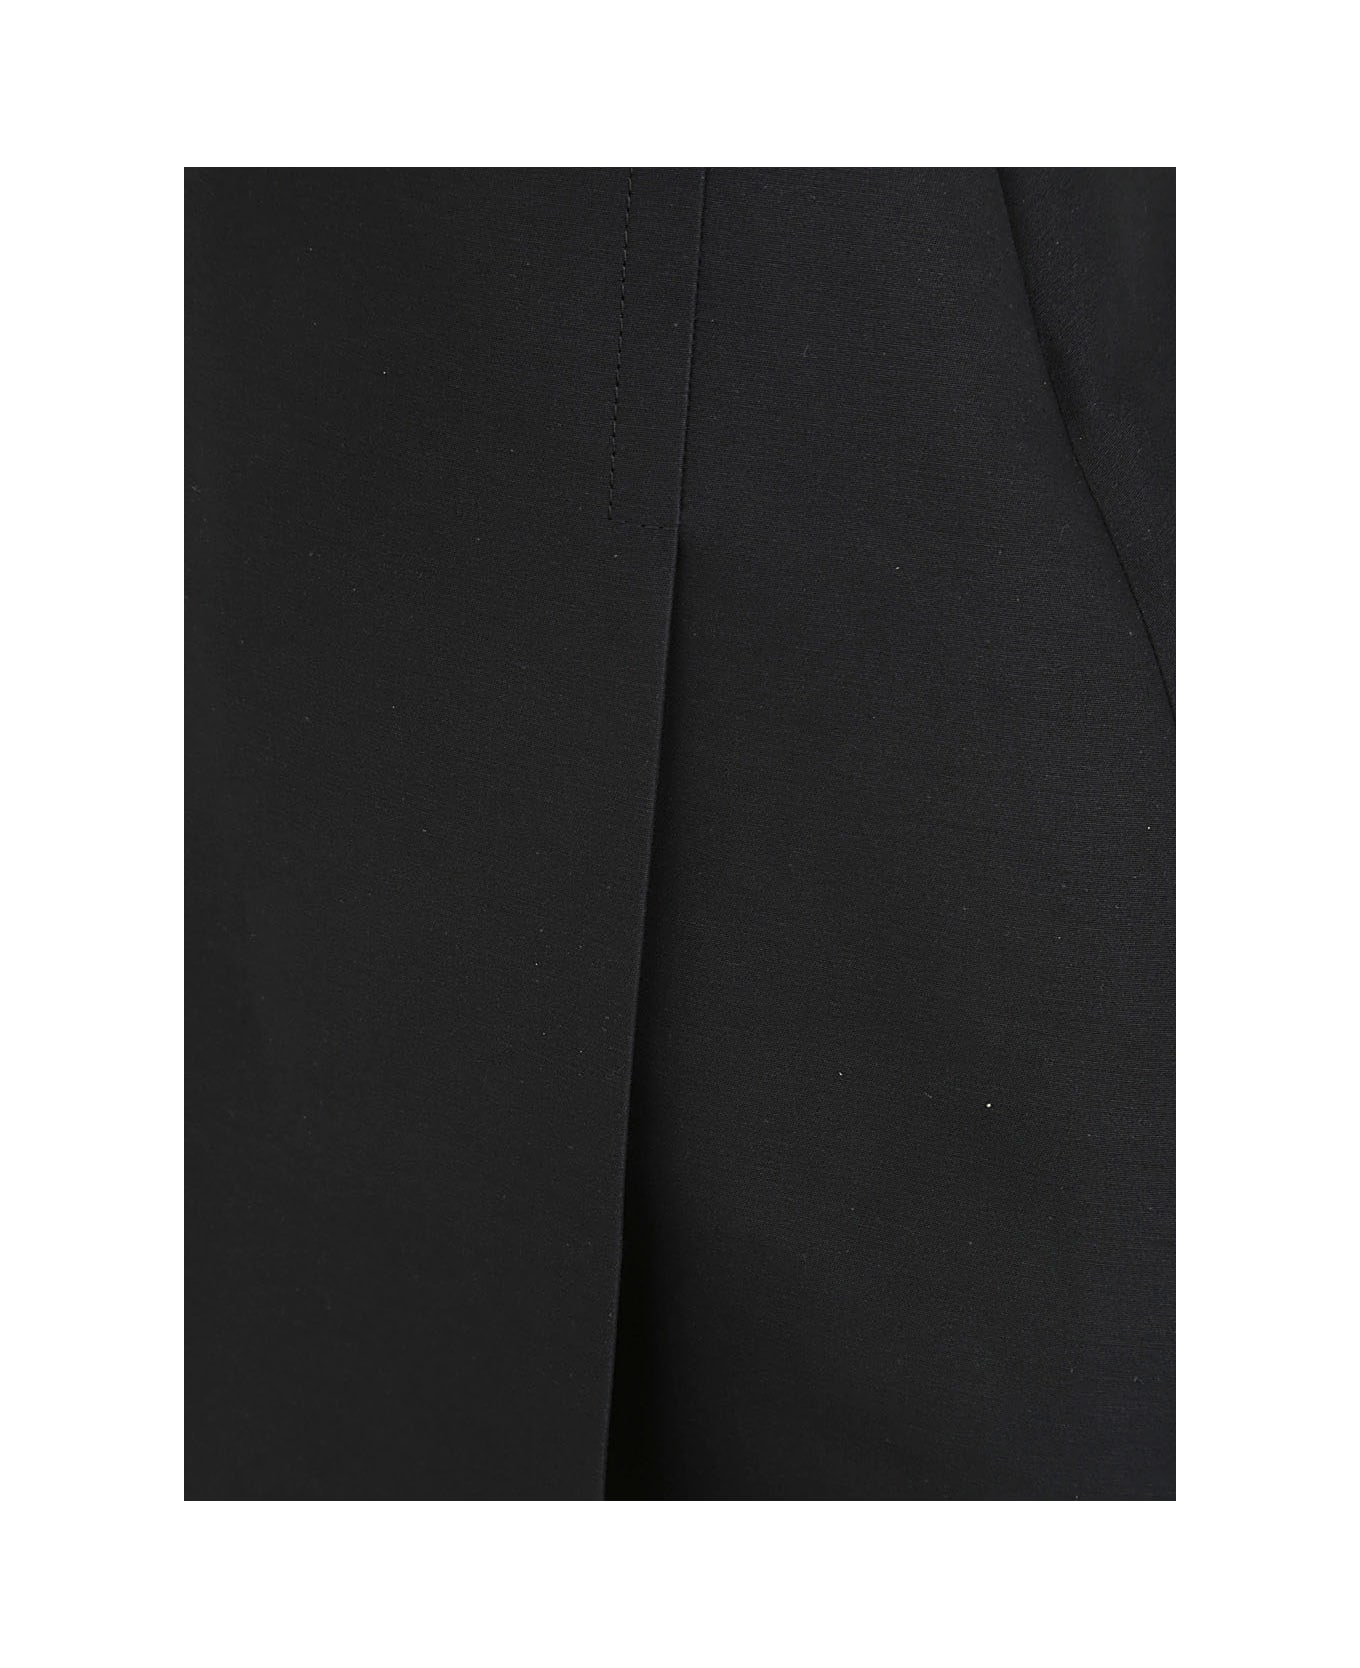 Marni Skirt - Black スカート